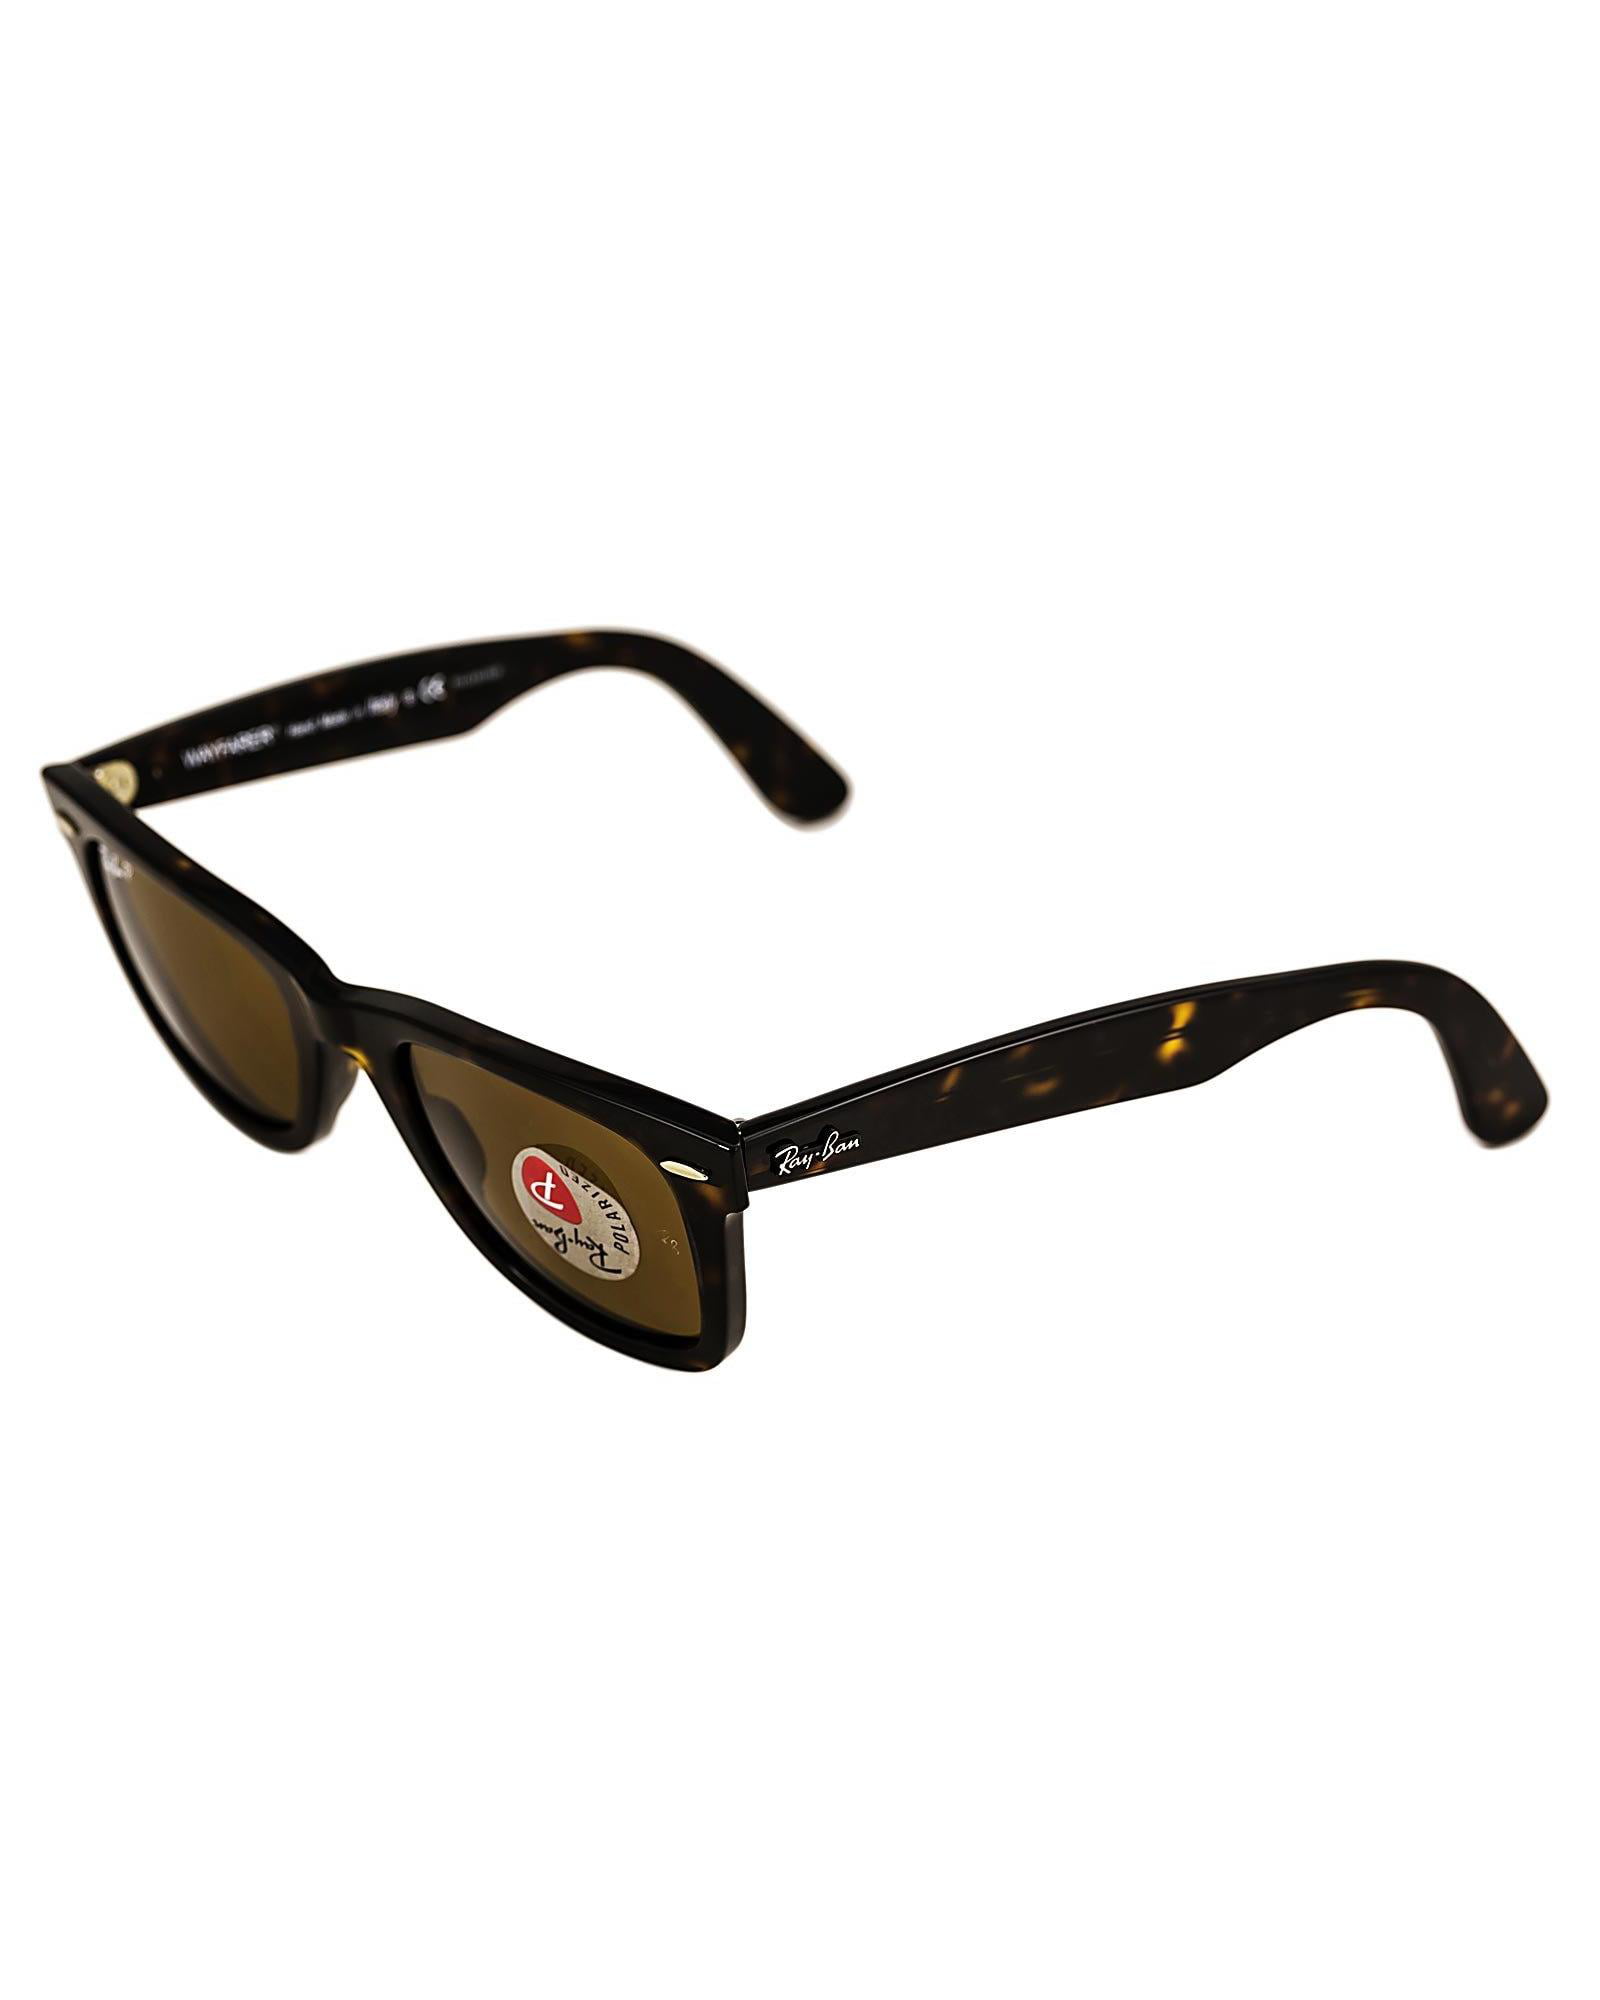 RAY-BAN Original Wayfarer Classic Sunglasses - HAVANA | Tillys